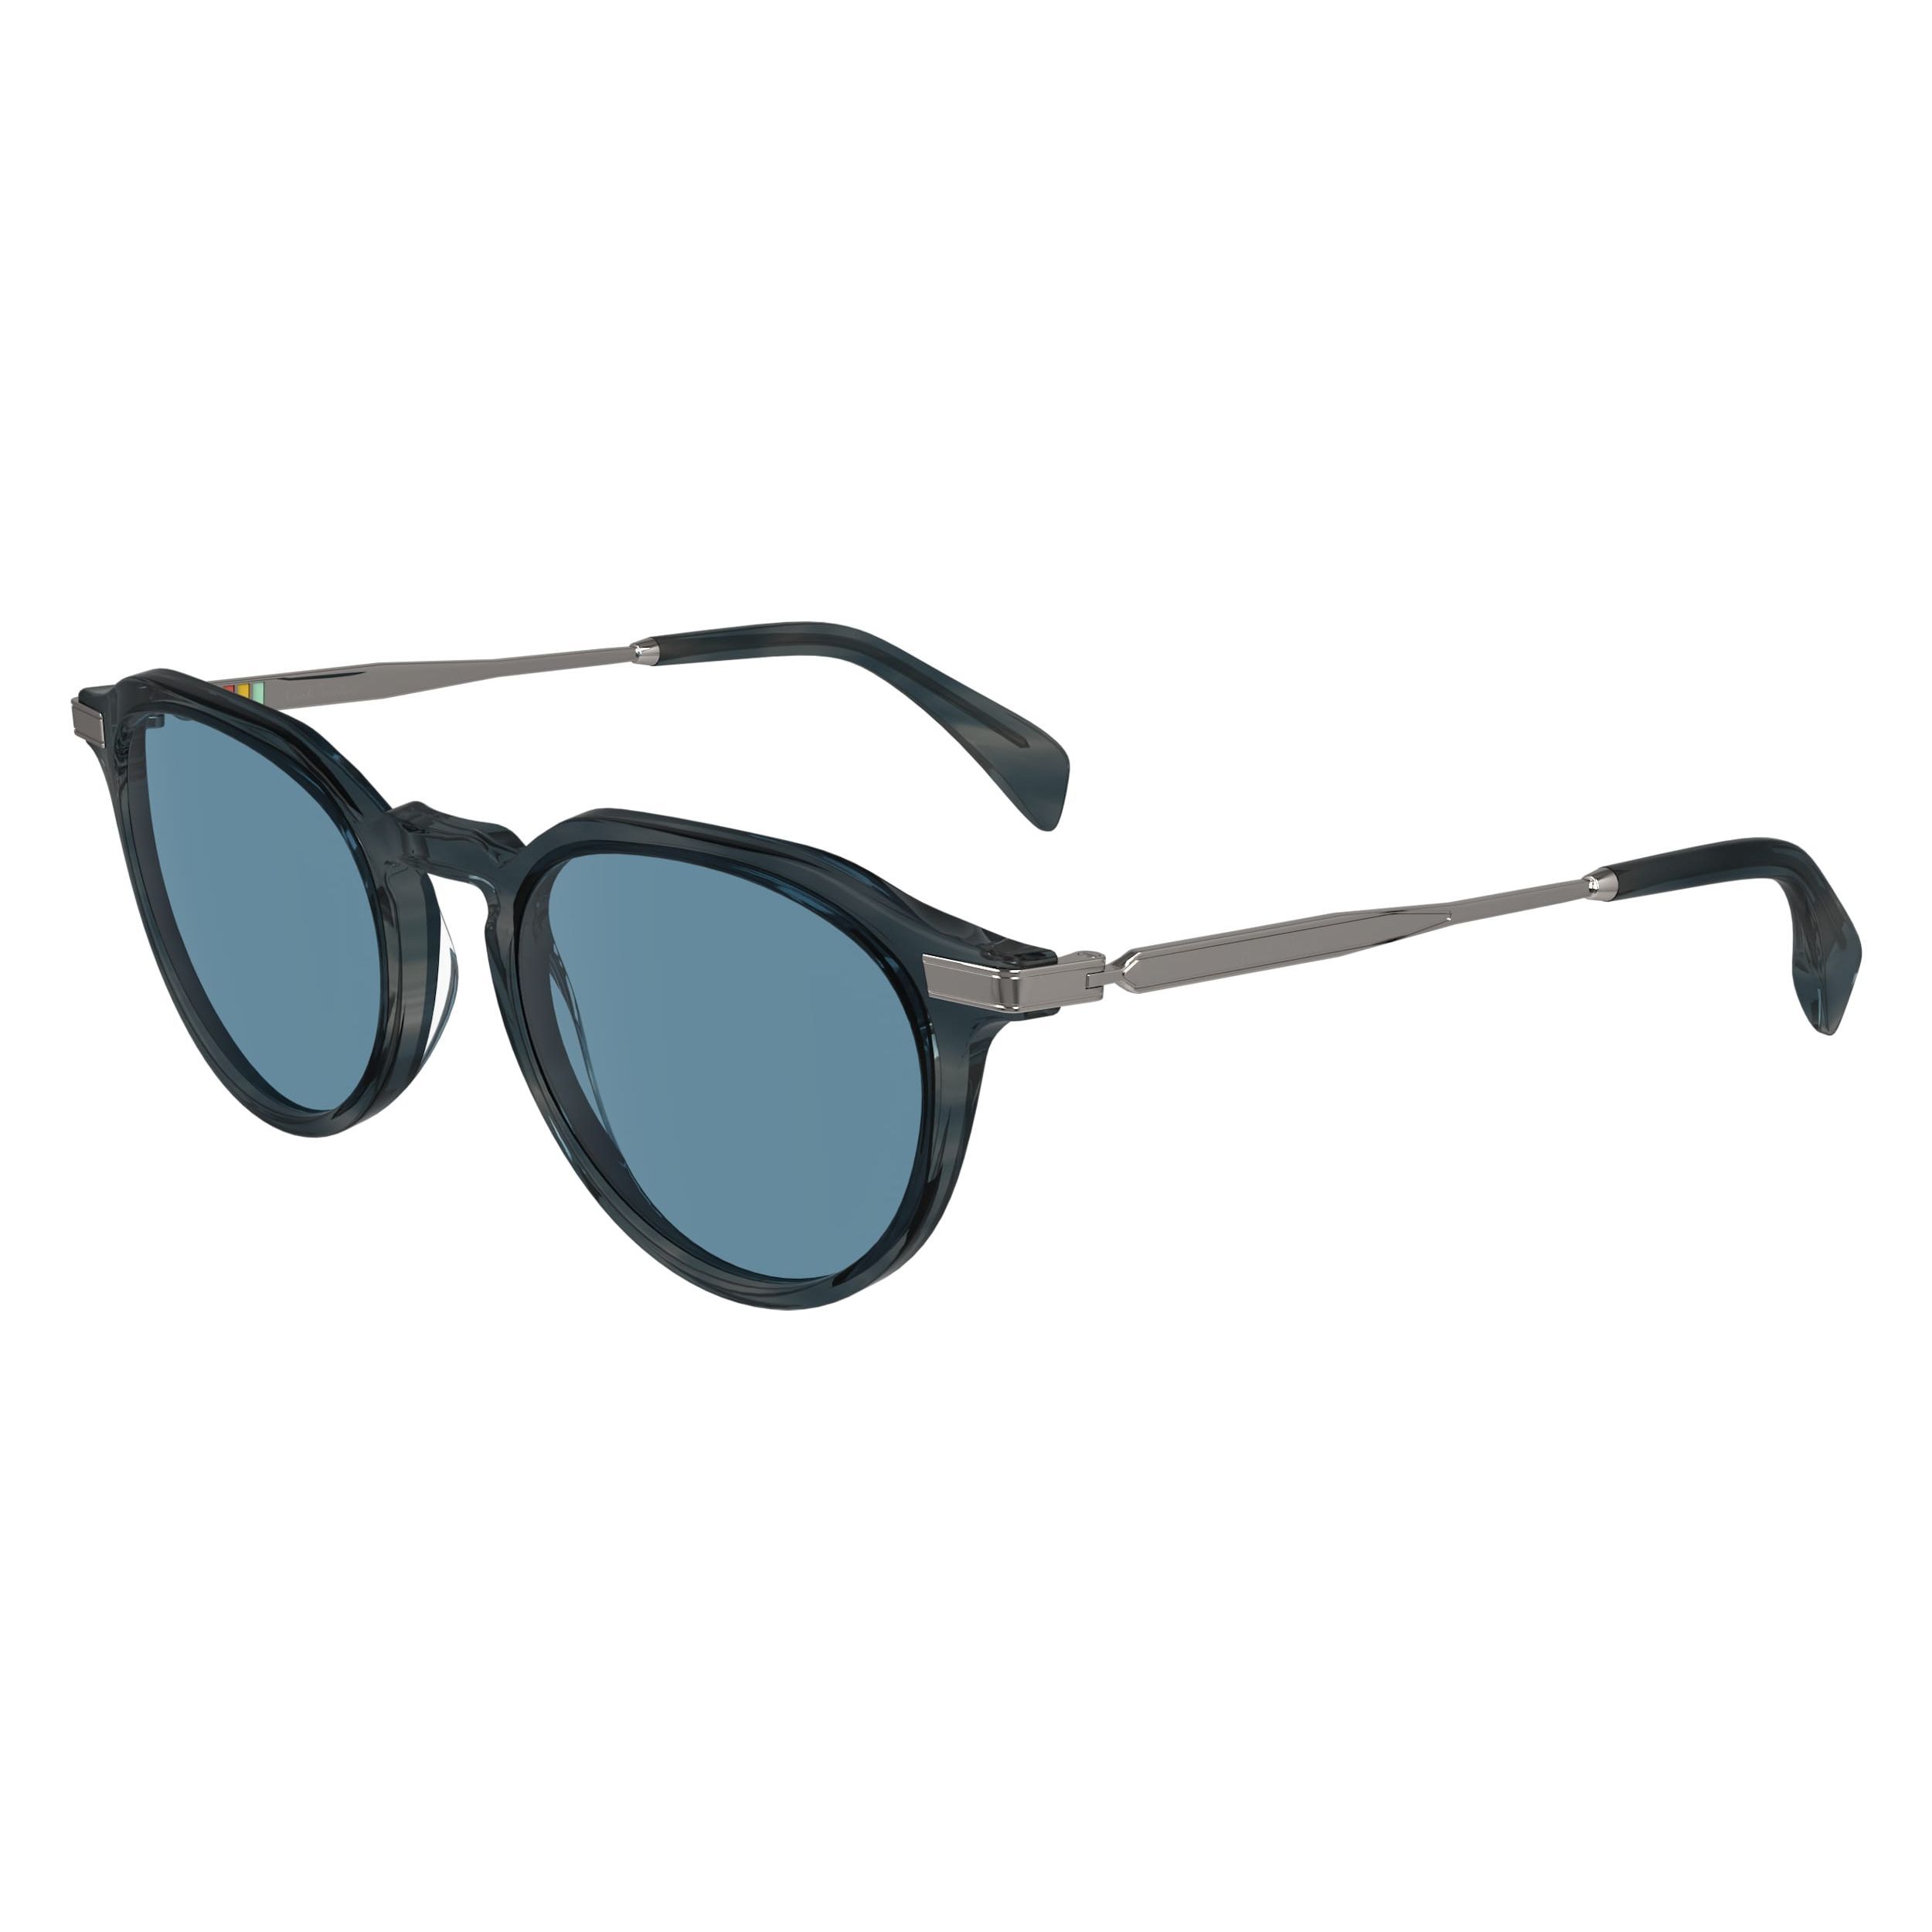 KEATS Oval Sunglasses 410 - size 51